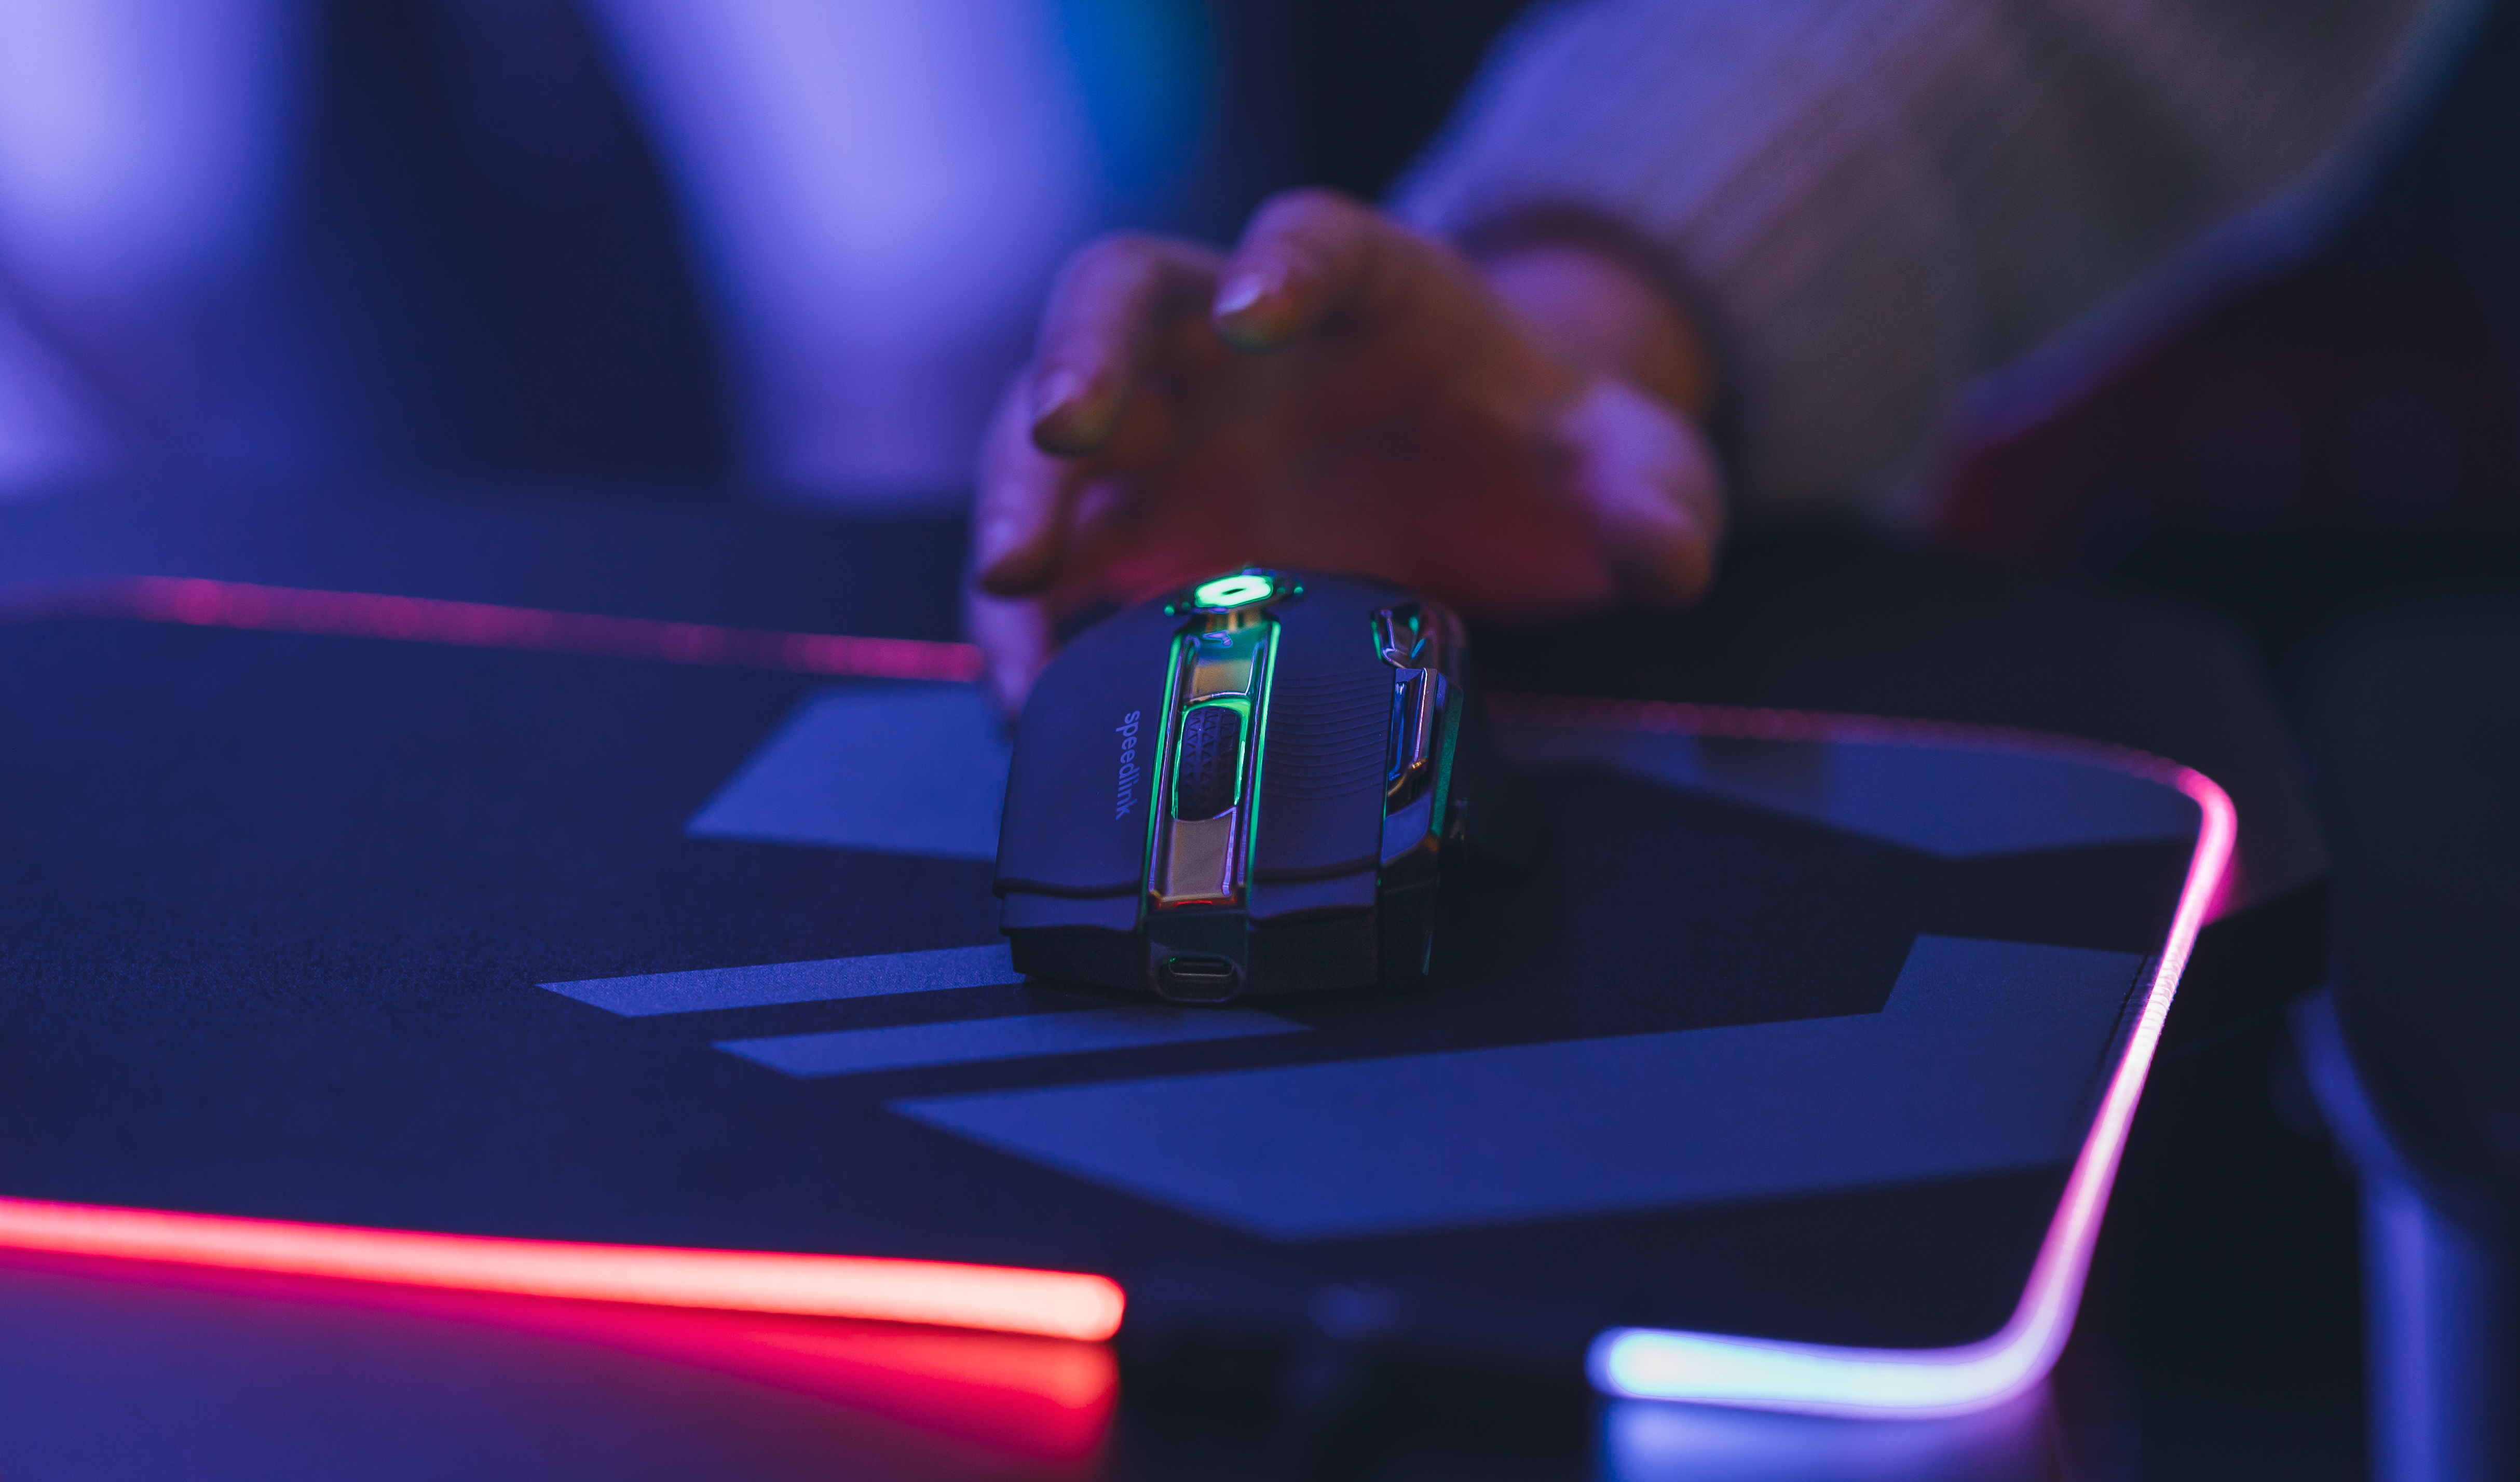 IMPERIOR RGB Gaming Maus - kabellos, rubber-schwarz